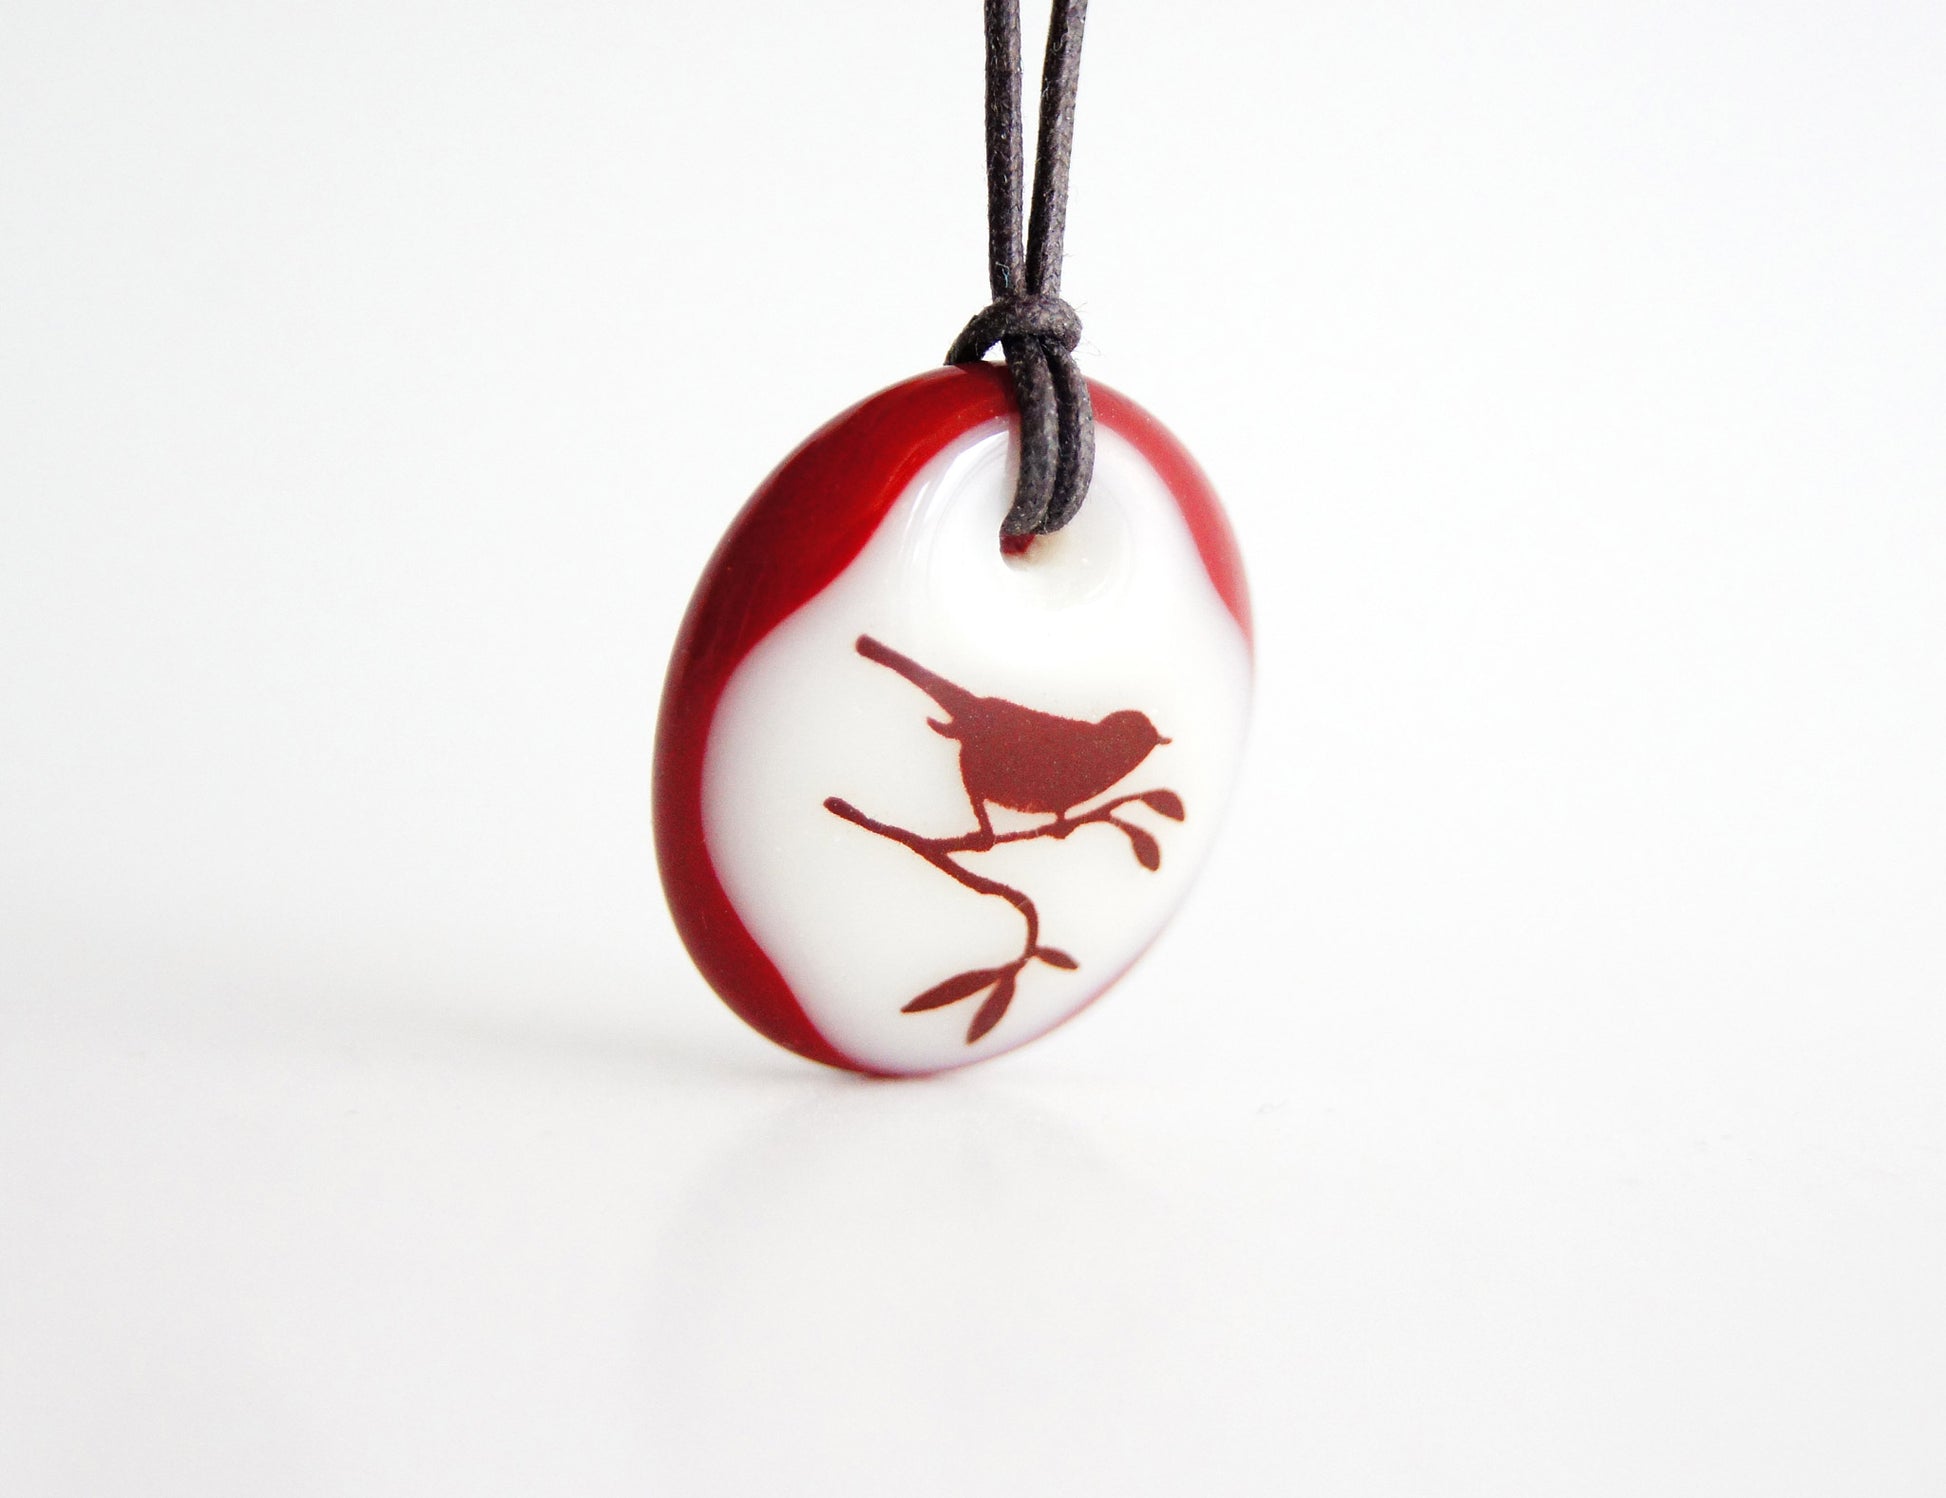 Bird in tree necklace handmade in glass. 